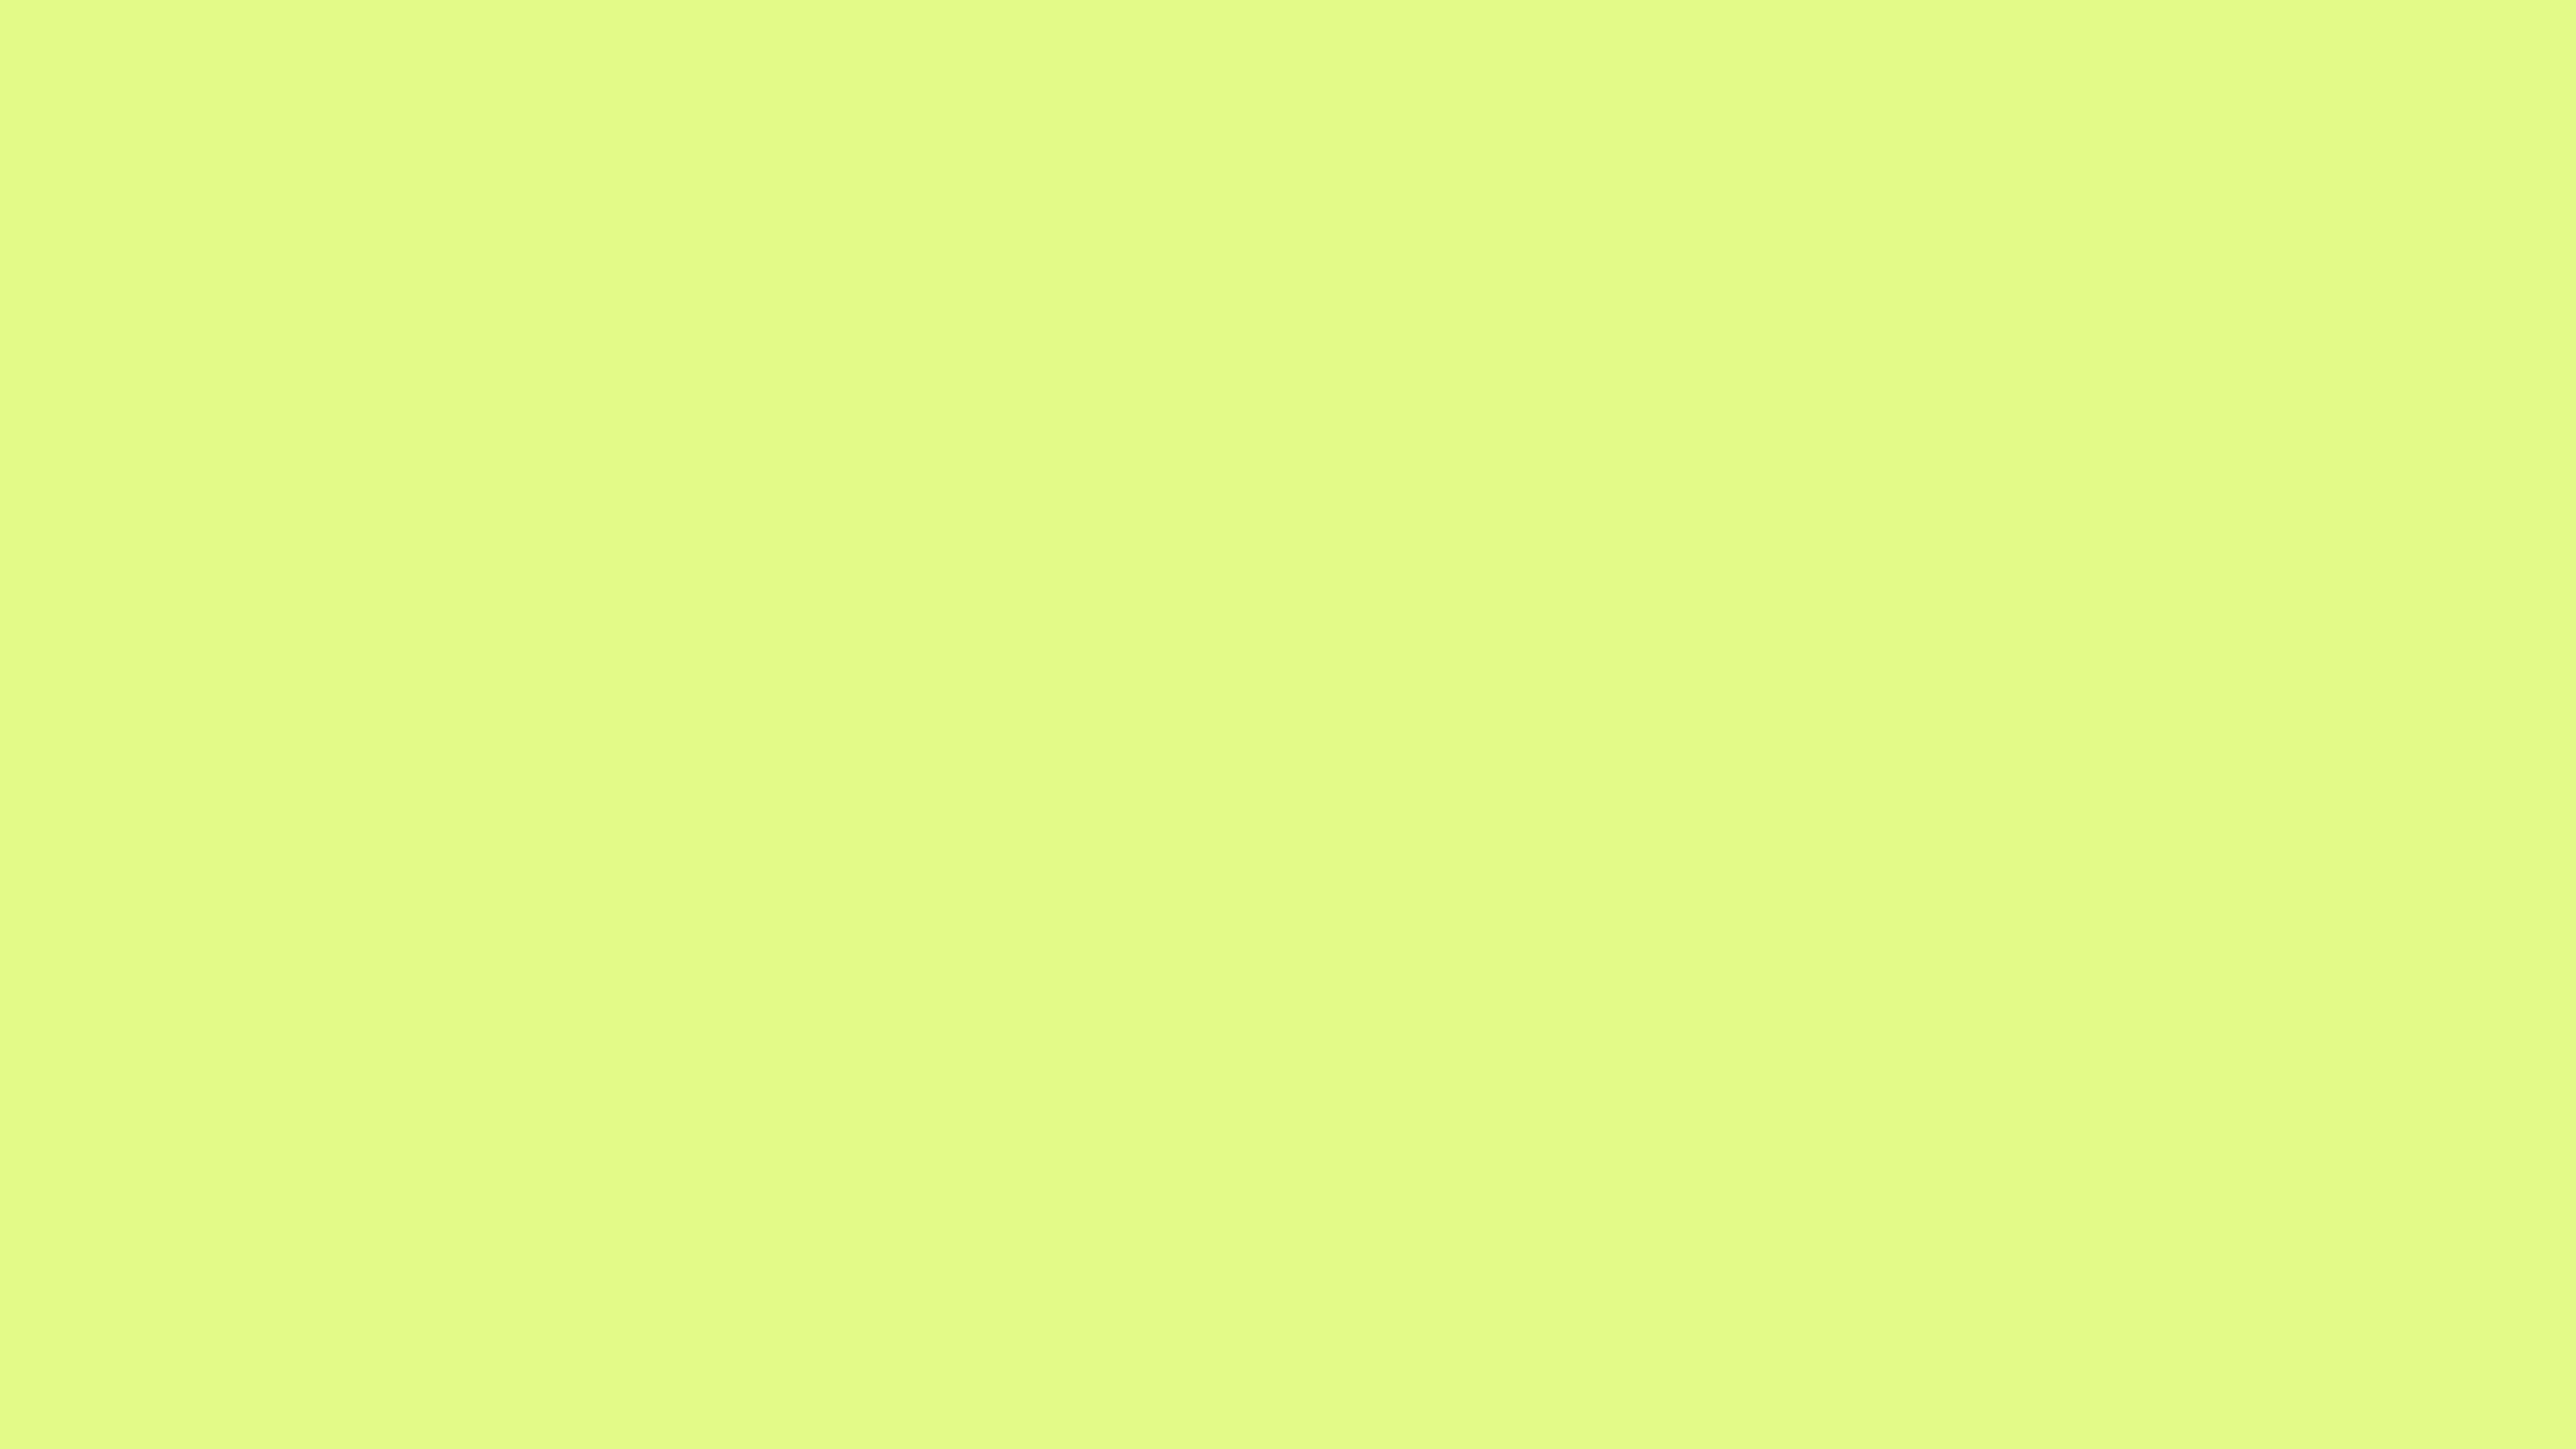 4096x2304 Midori Solid Color Background